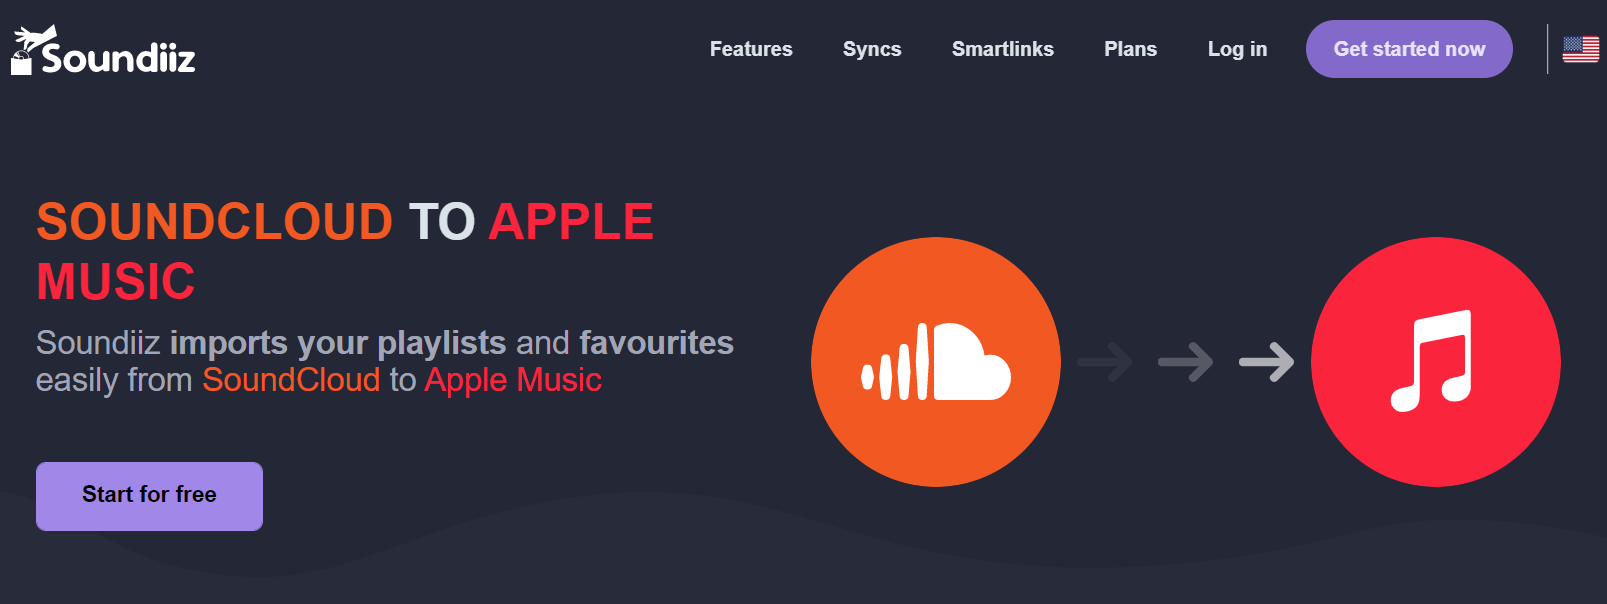 Soundiiz Soundcloud إلى Apple Music